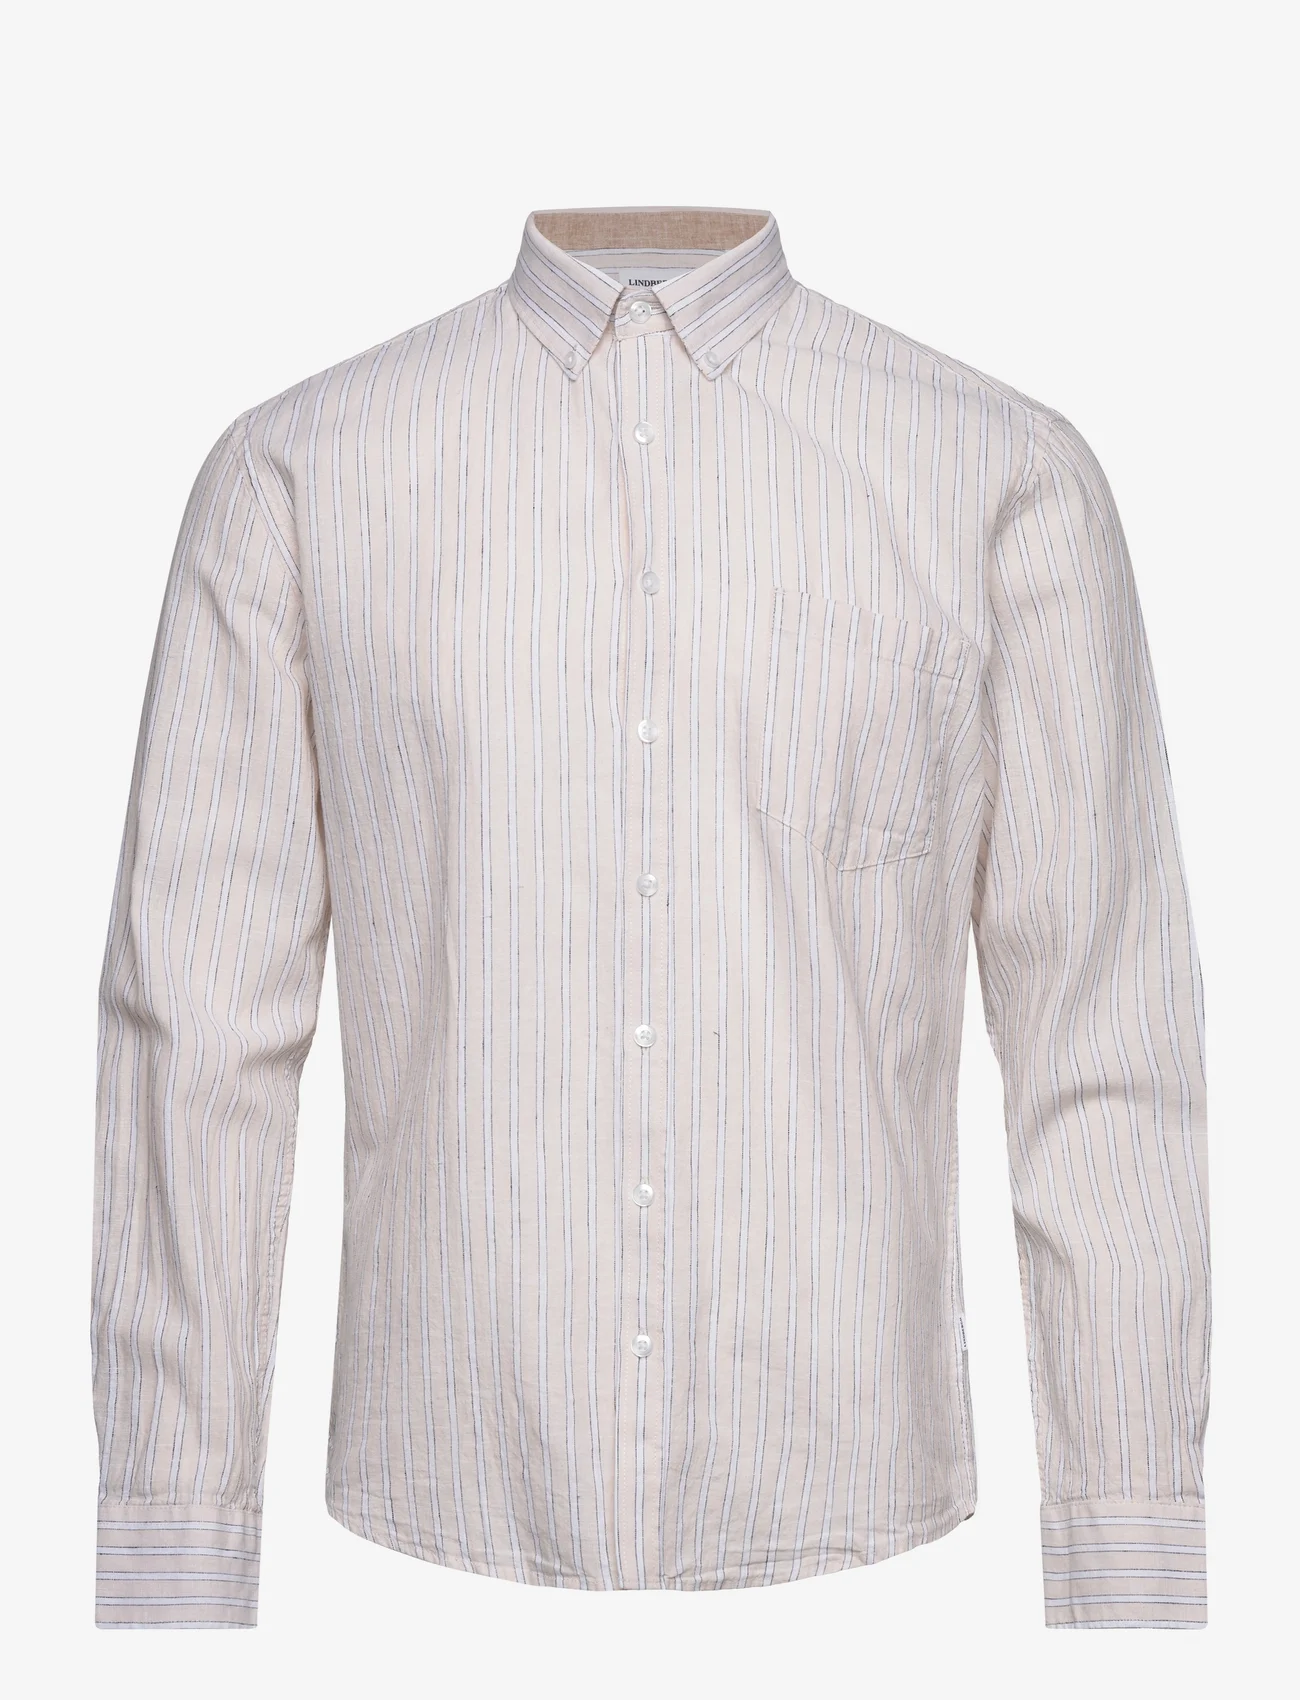 Lindbergh - Striped cotton/linen shirt L/S - linskjorter - sand - 0